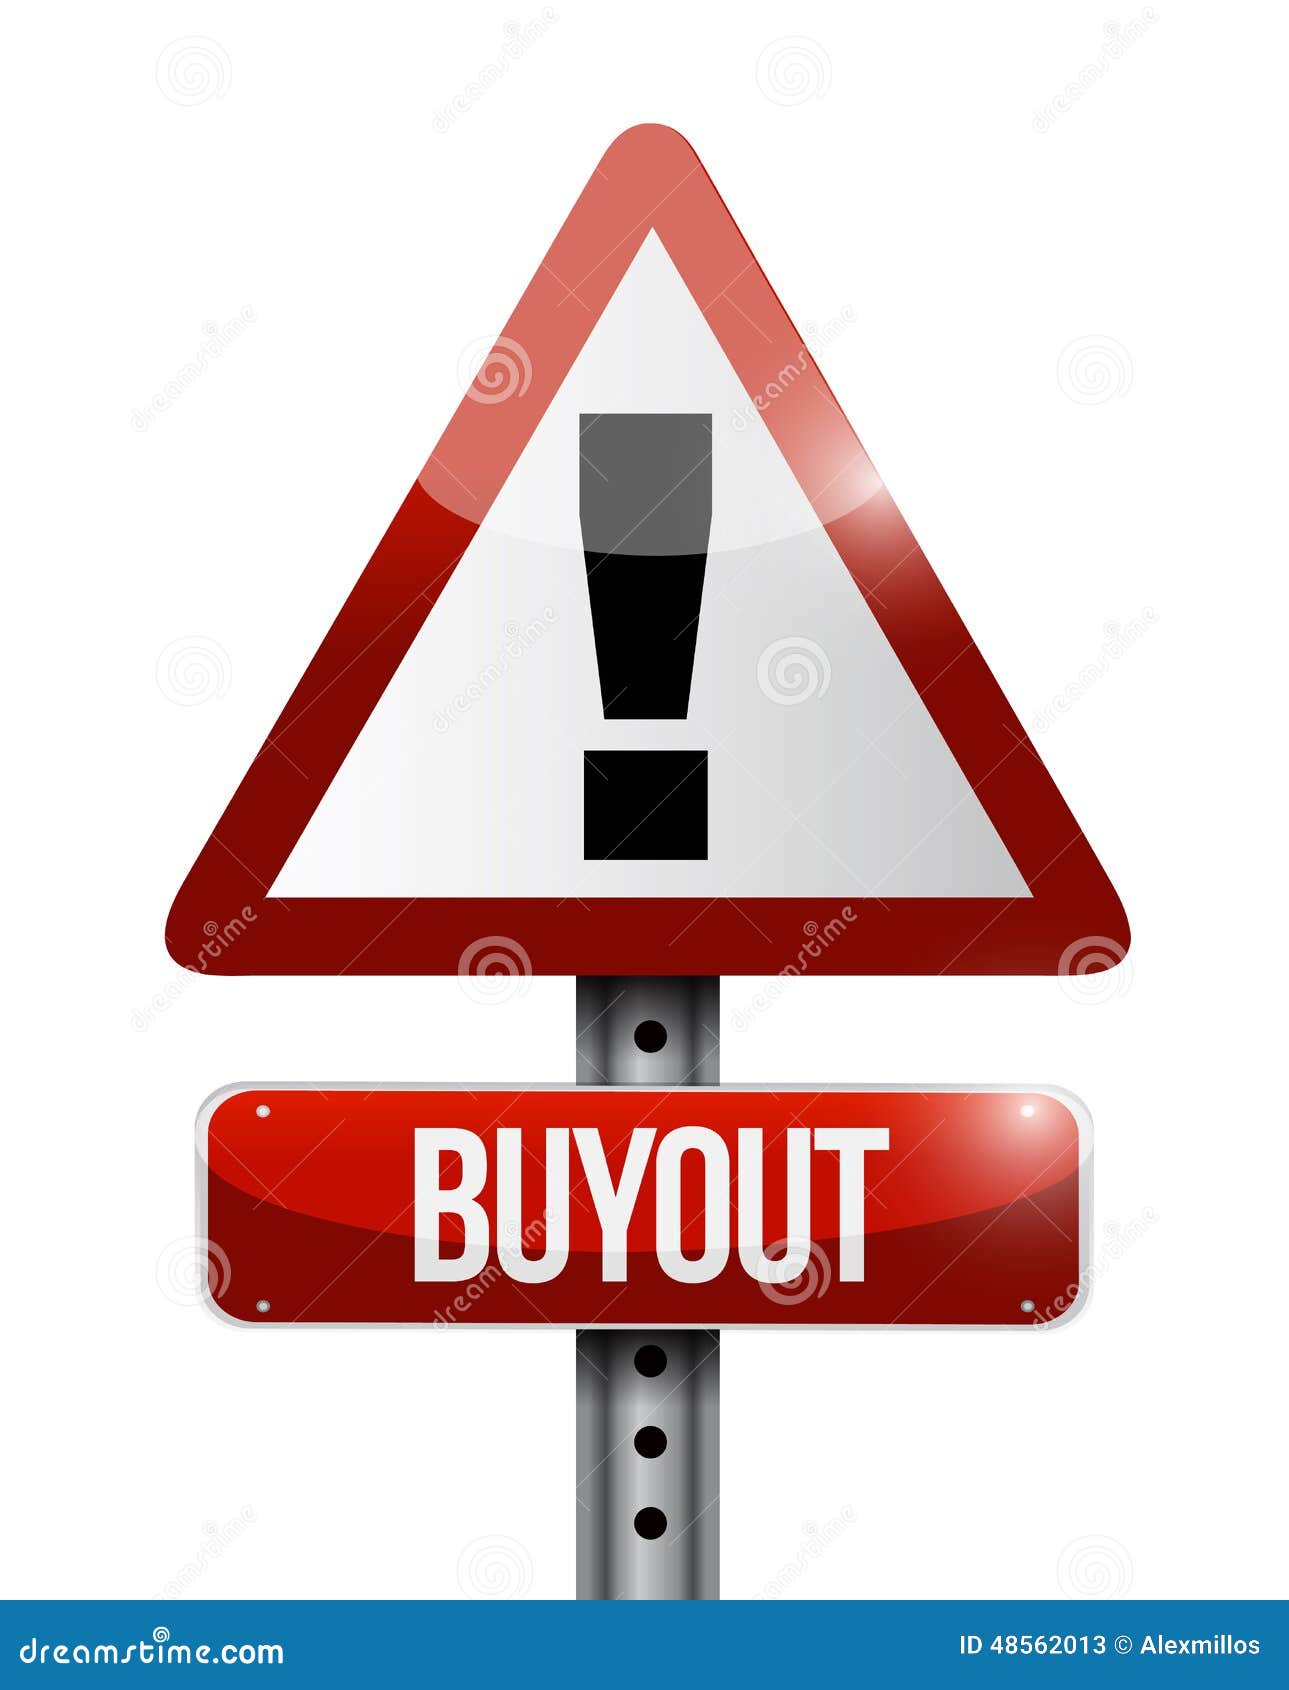 buyout warning sign  